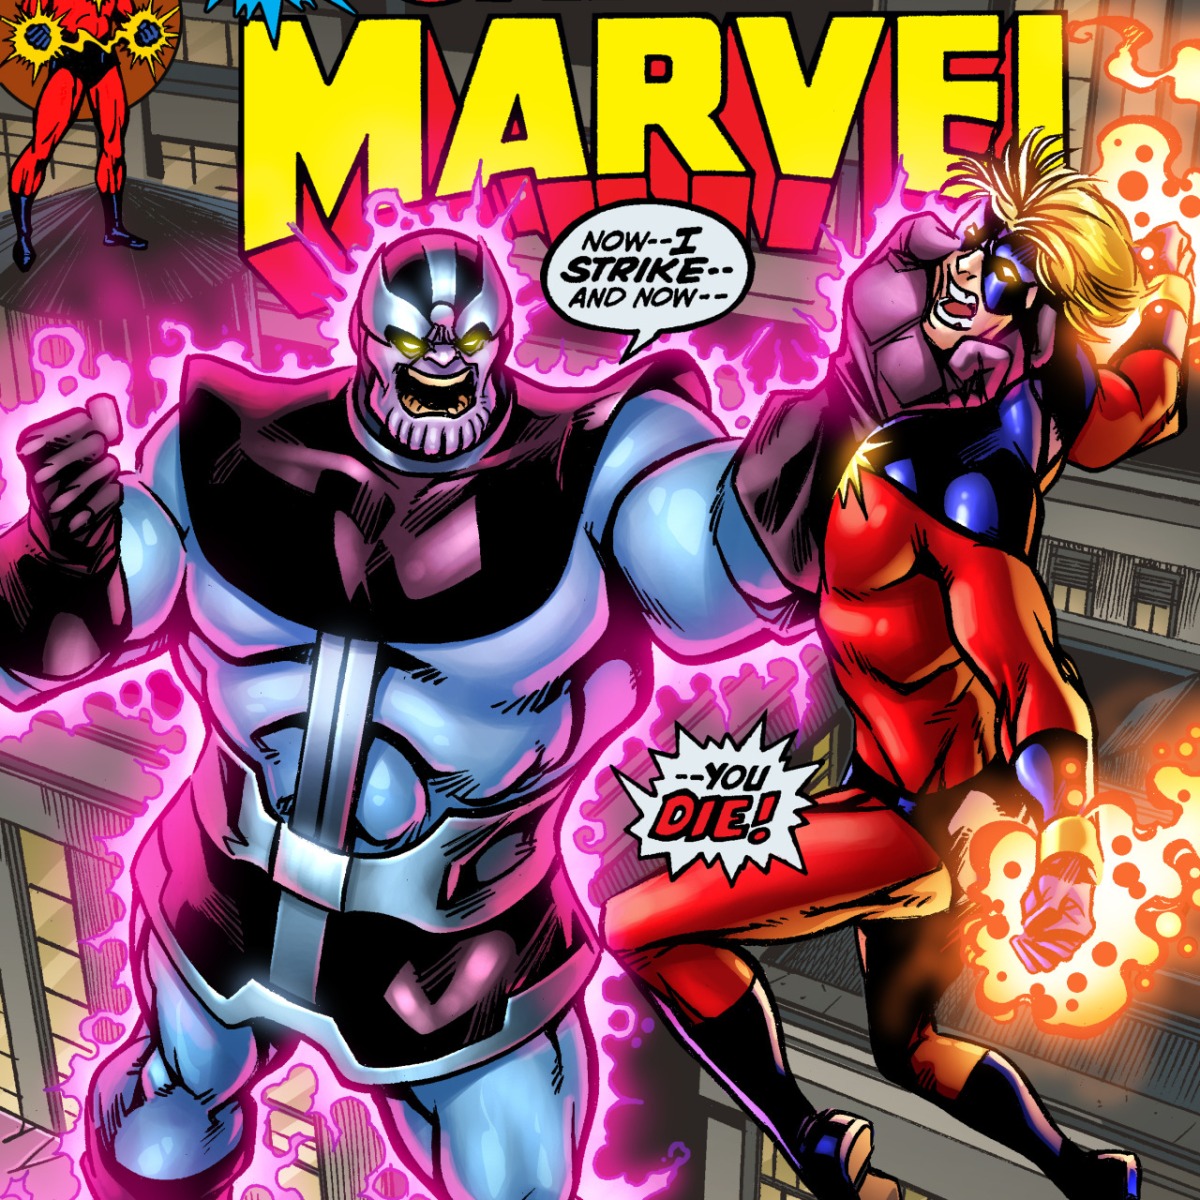 Thanos anniversary – Comic cover remake